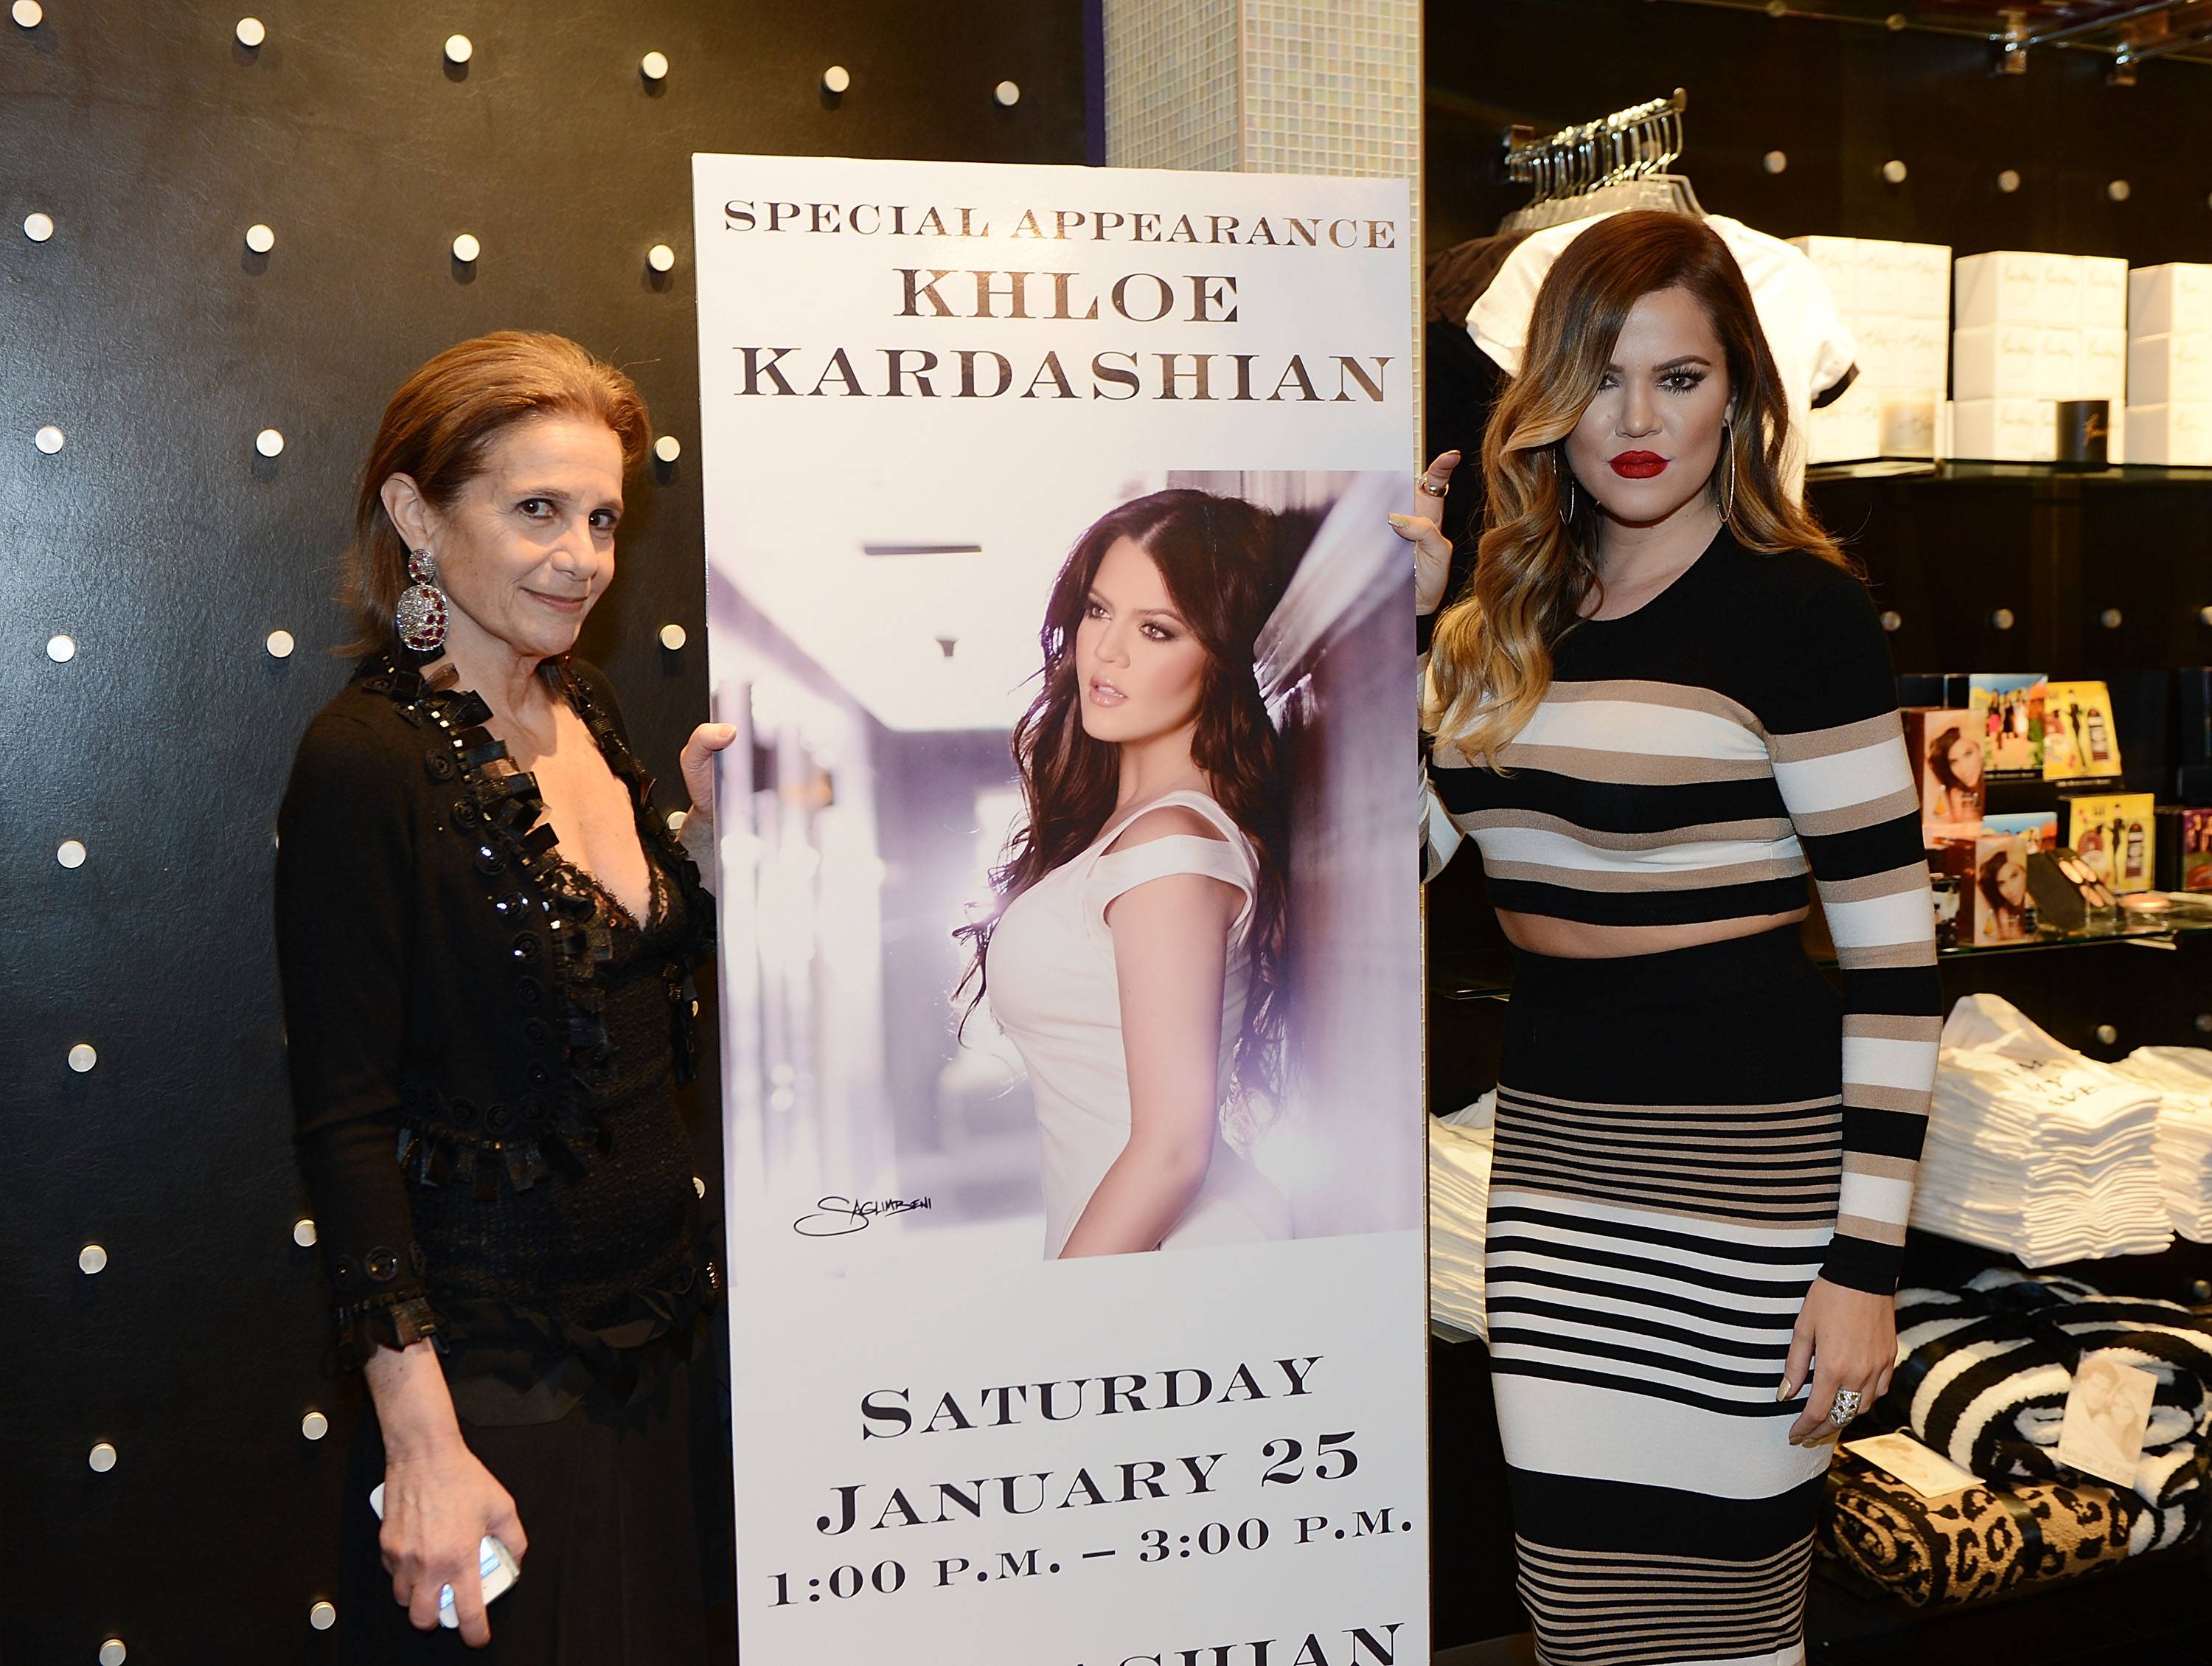 Khloe Kardashian Special Appearance At Kardashian Khaos In The Mirage Hotel And Casino